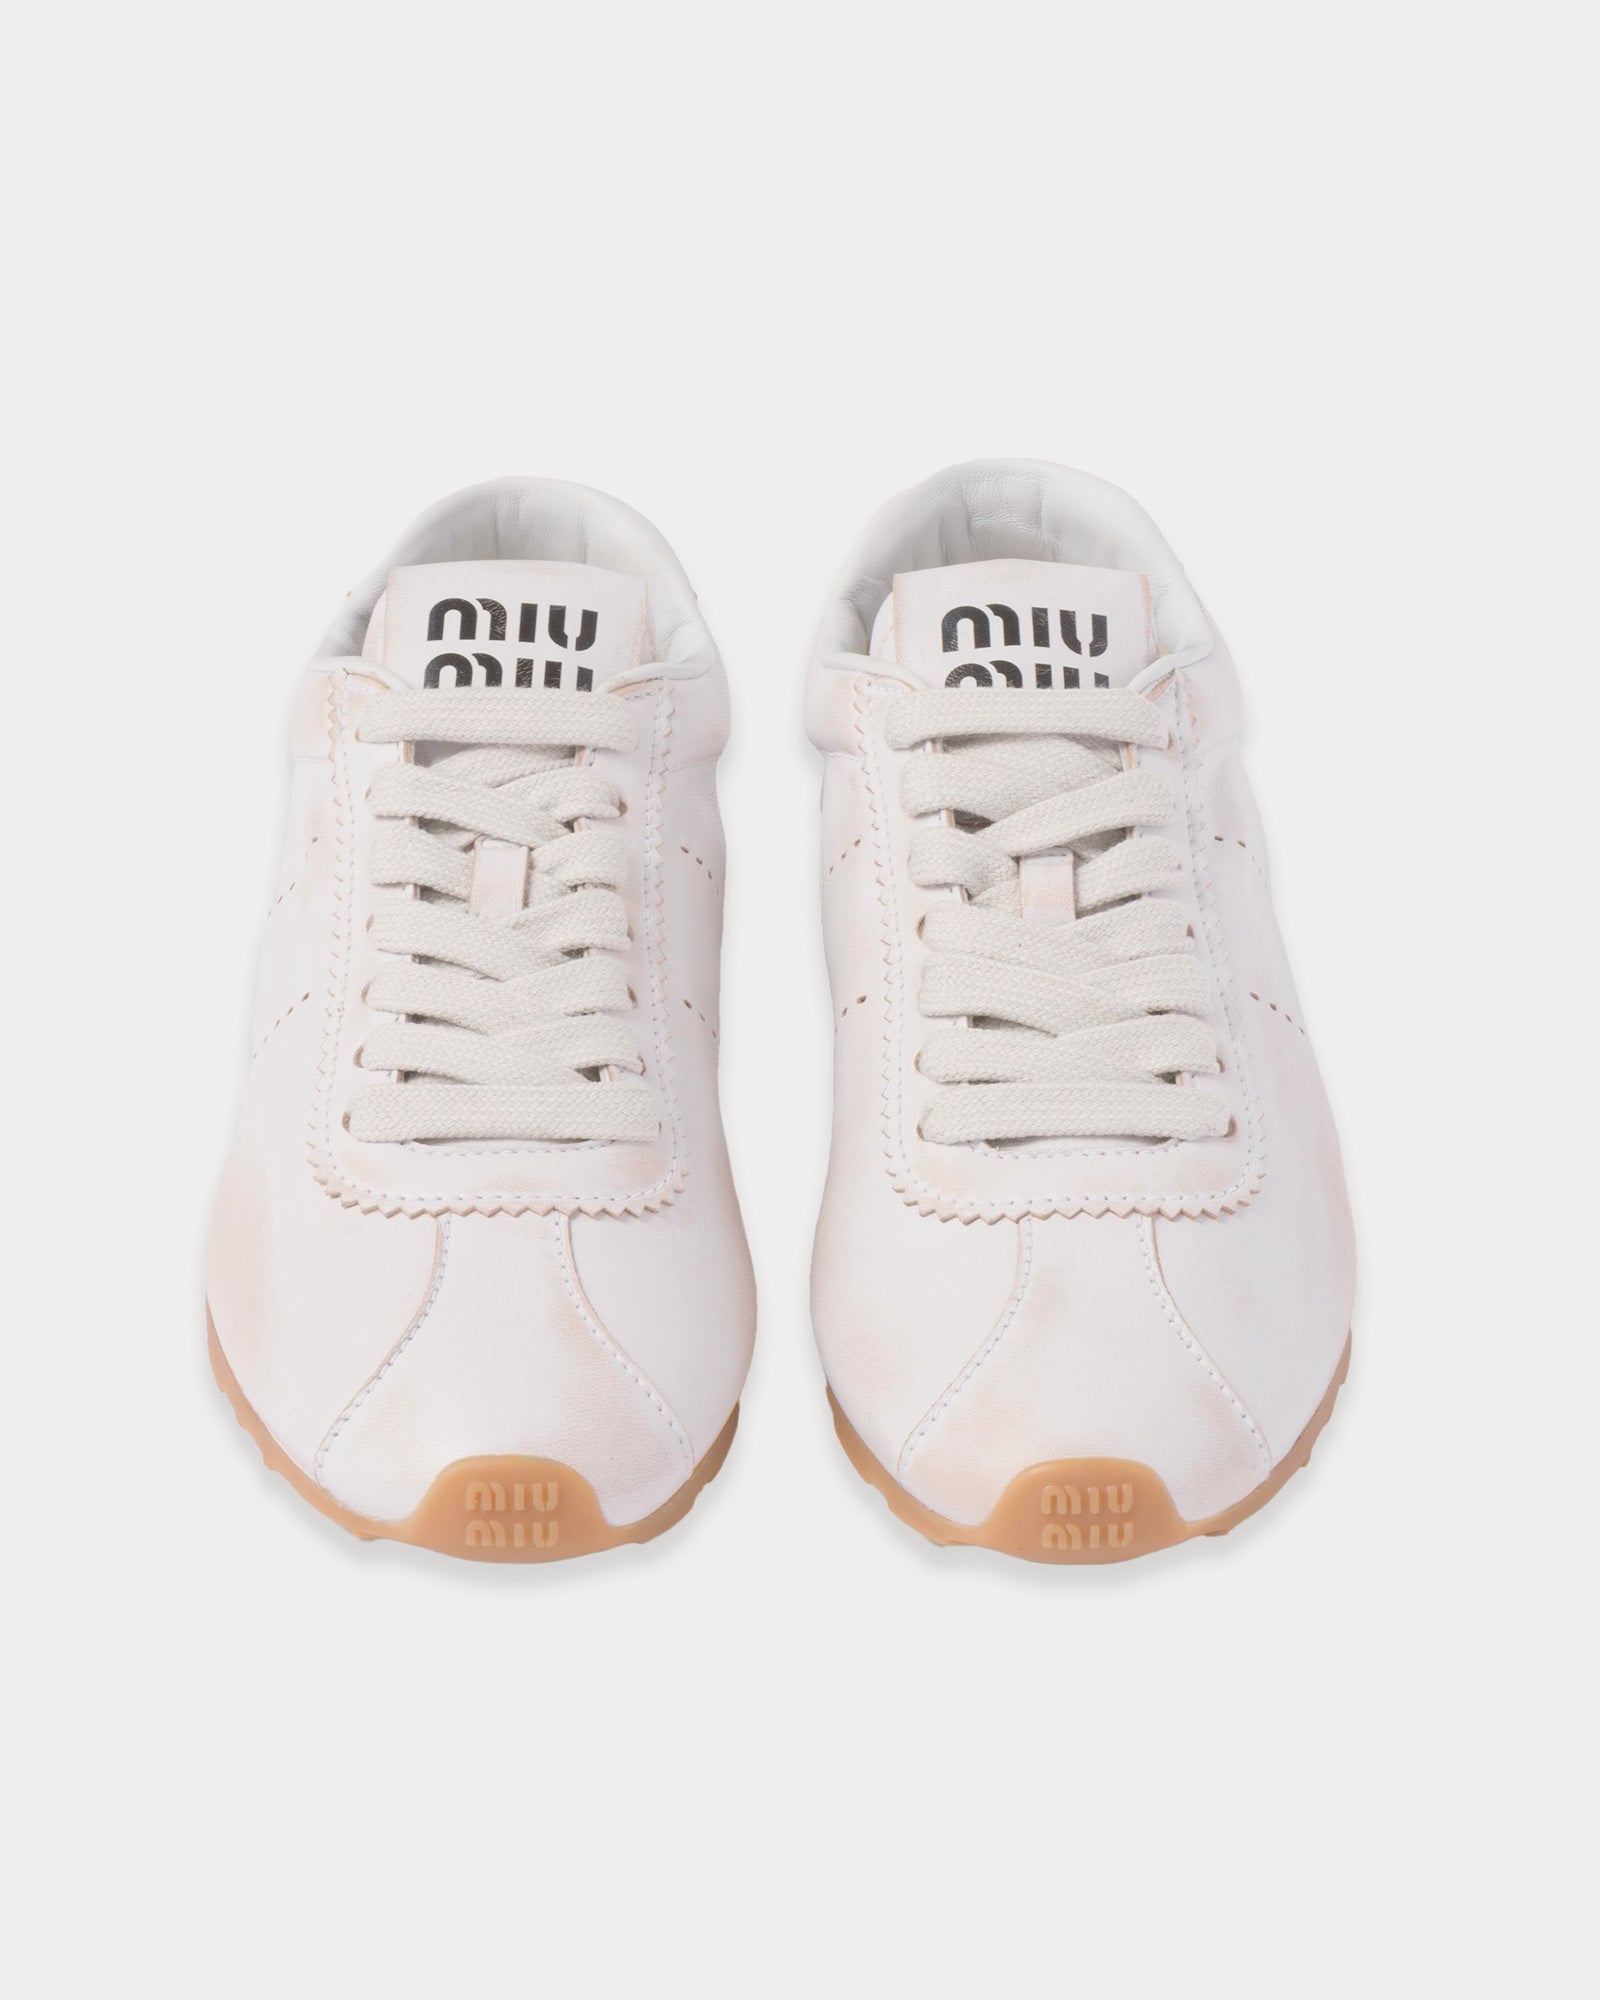 Miu Miu - Bleached Nappa Leather White Low Top Sneakers